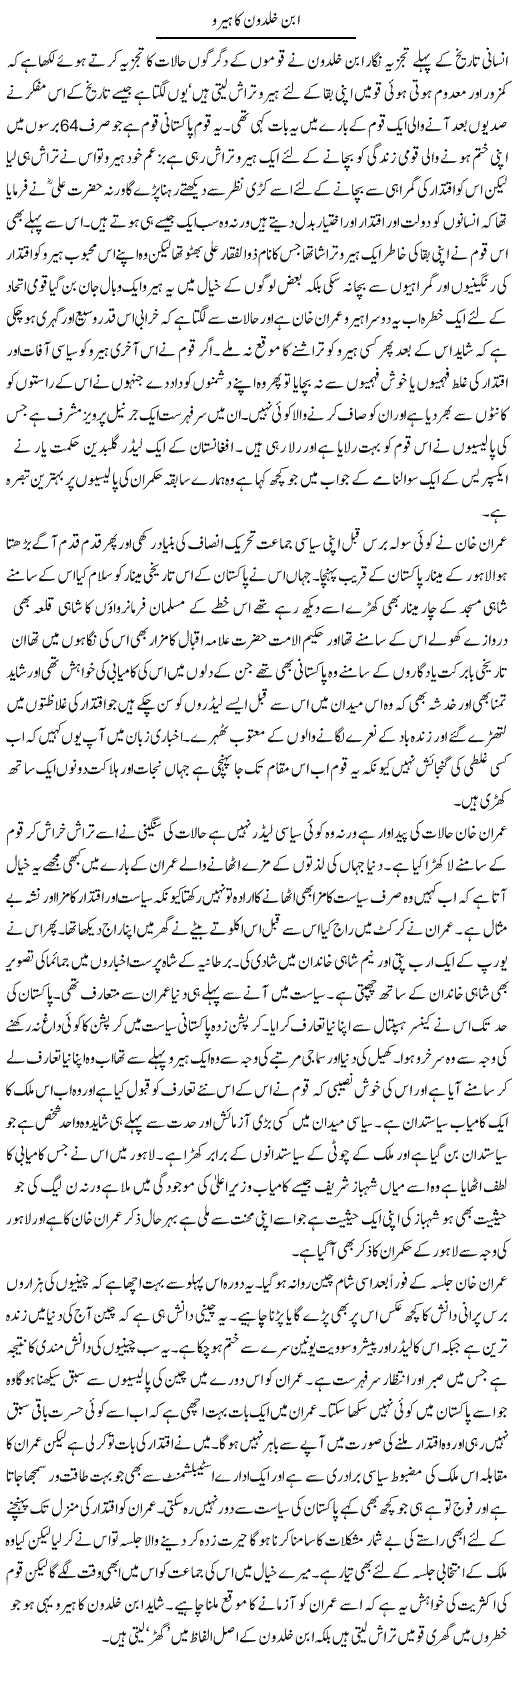 Imran Khan Express Column Abdul Qadir 3 November 2011